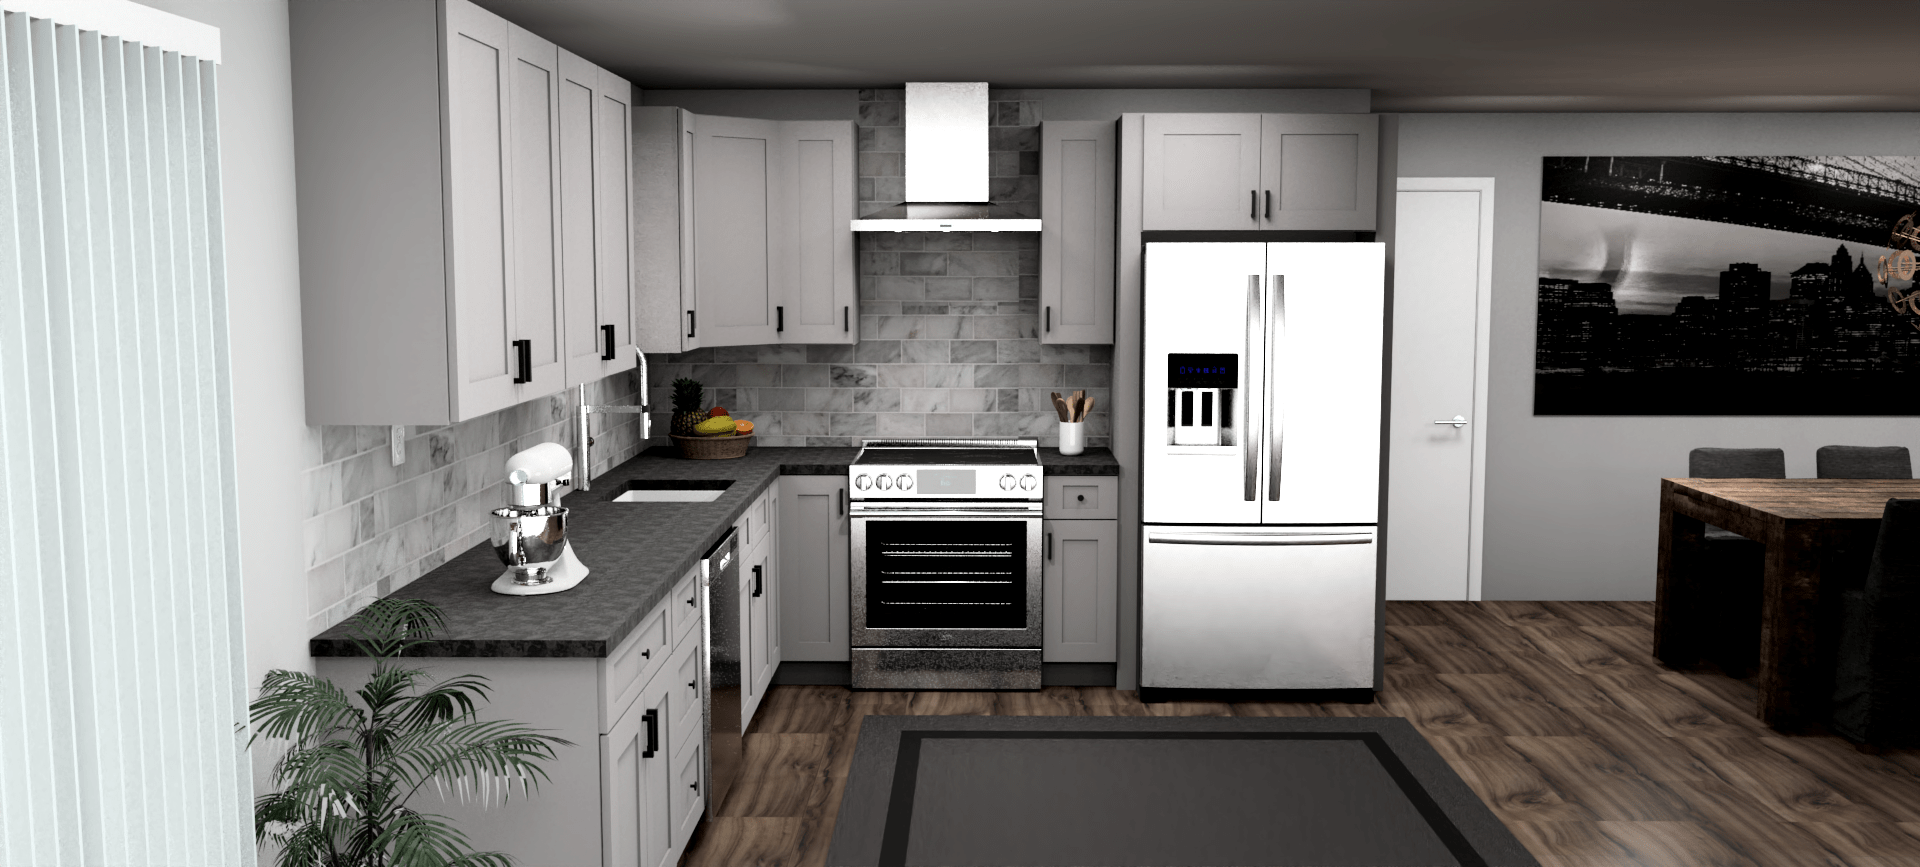 Fabuwood Allure Galaxy Nickel 12 x 10 L Shaped Kitchen Front Layout Photo